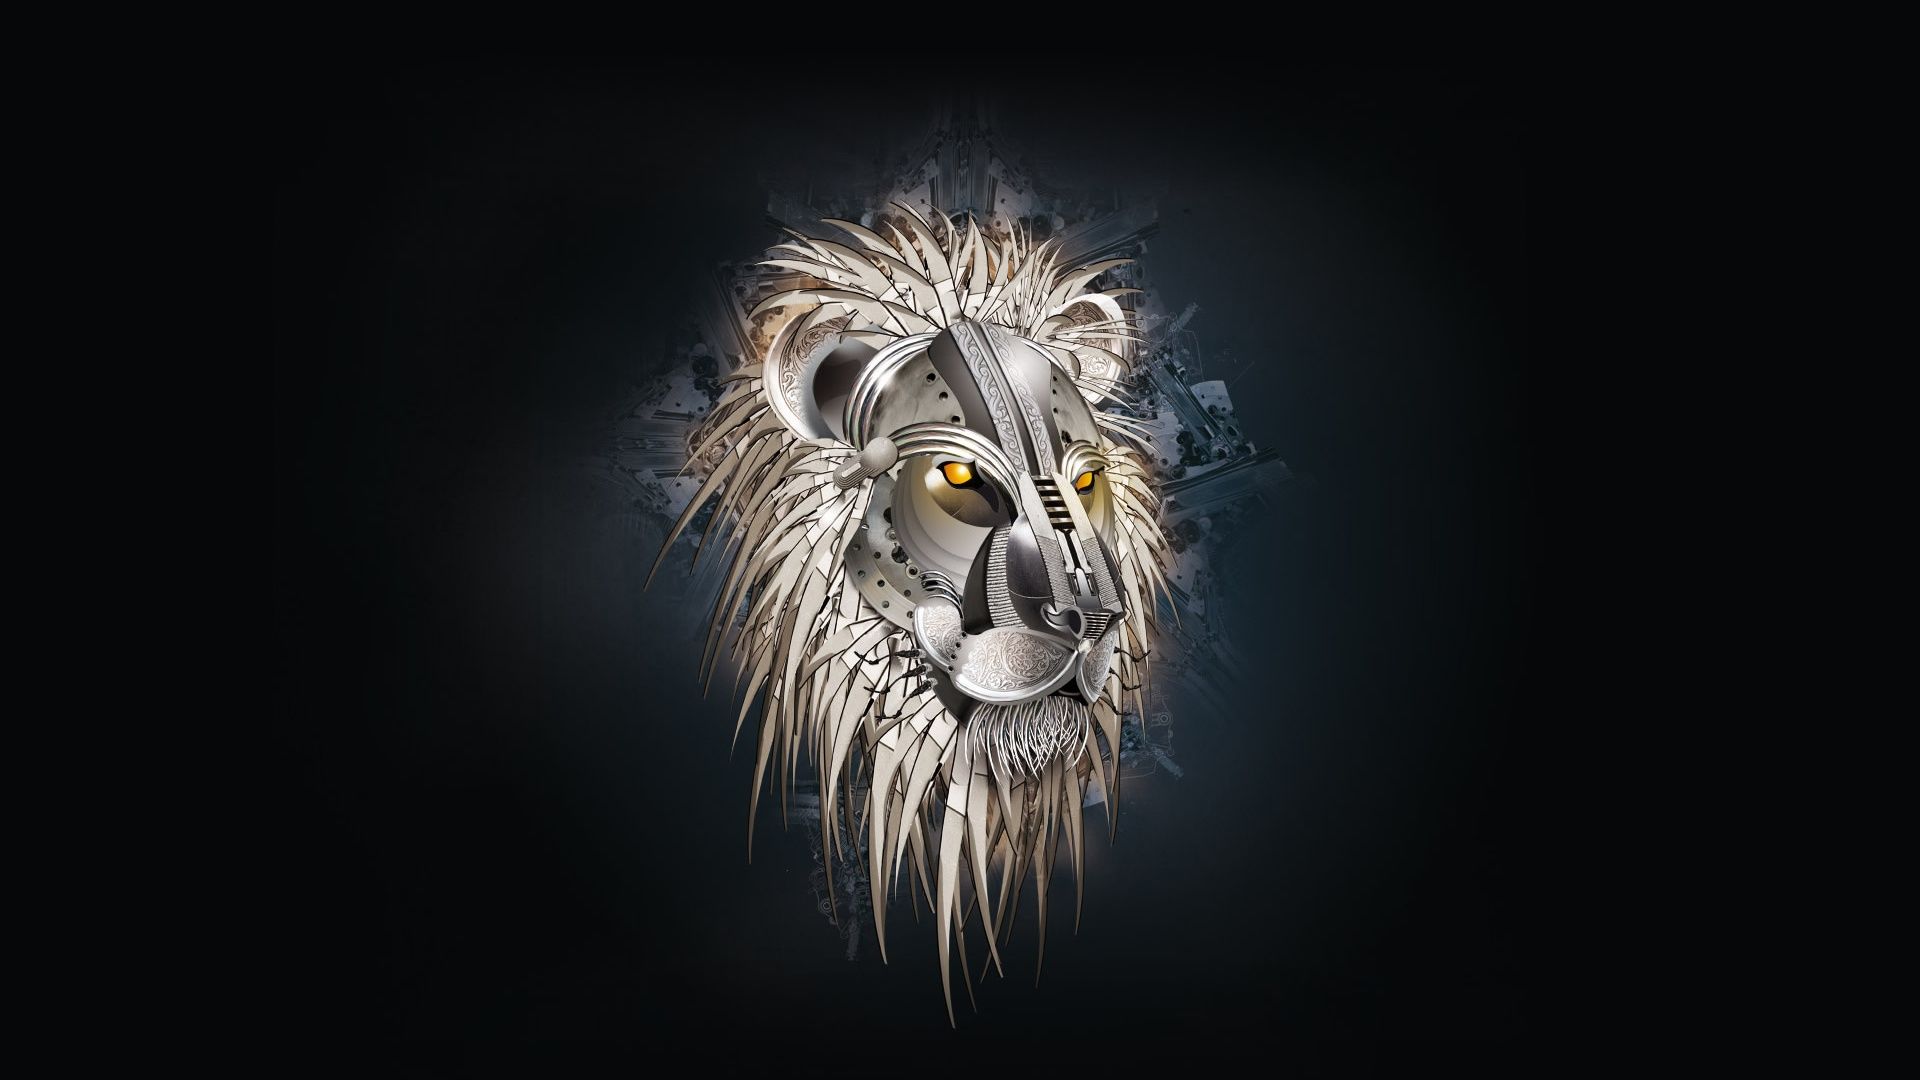 Cool Lion Wallpaper -themes.com